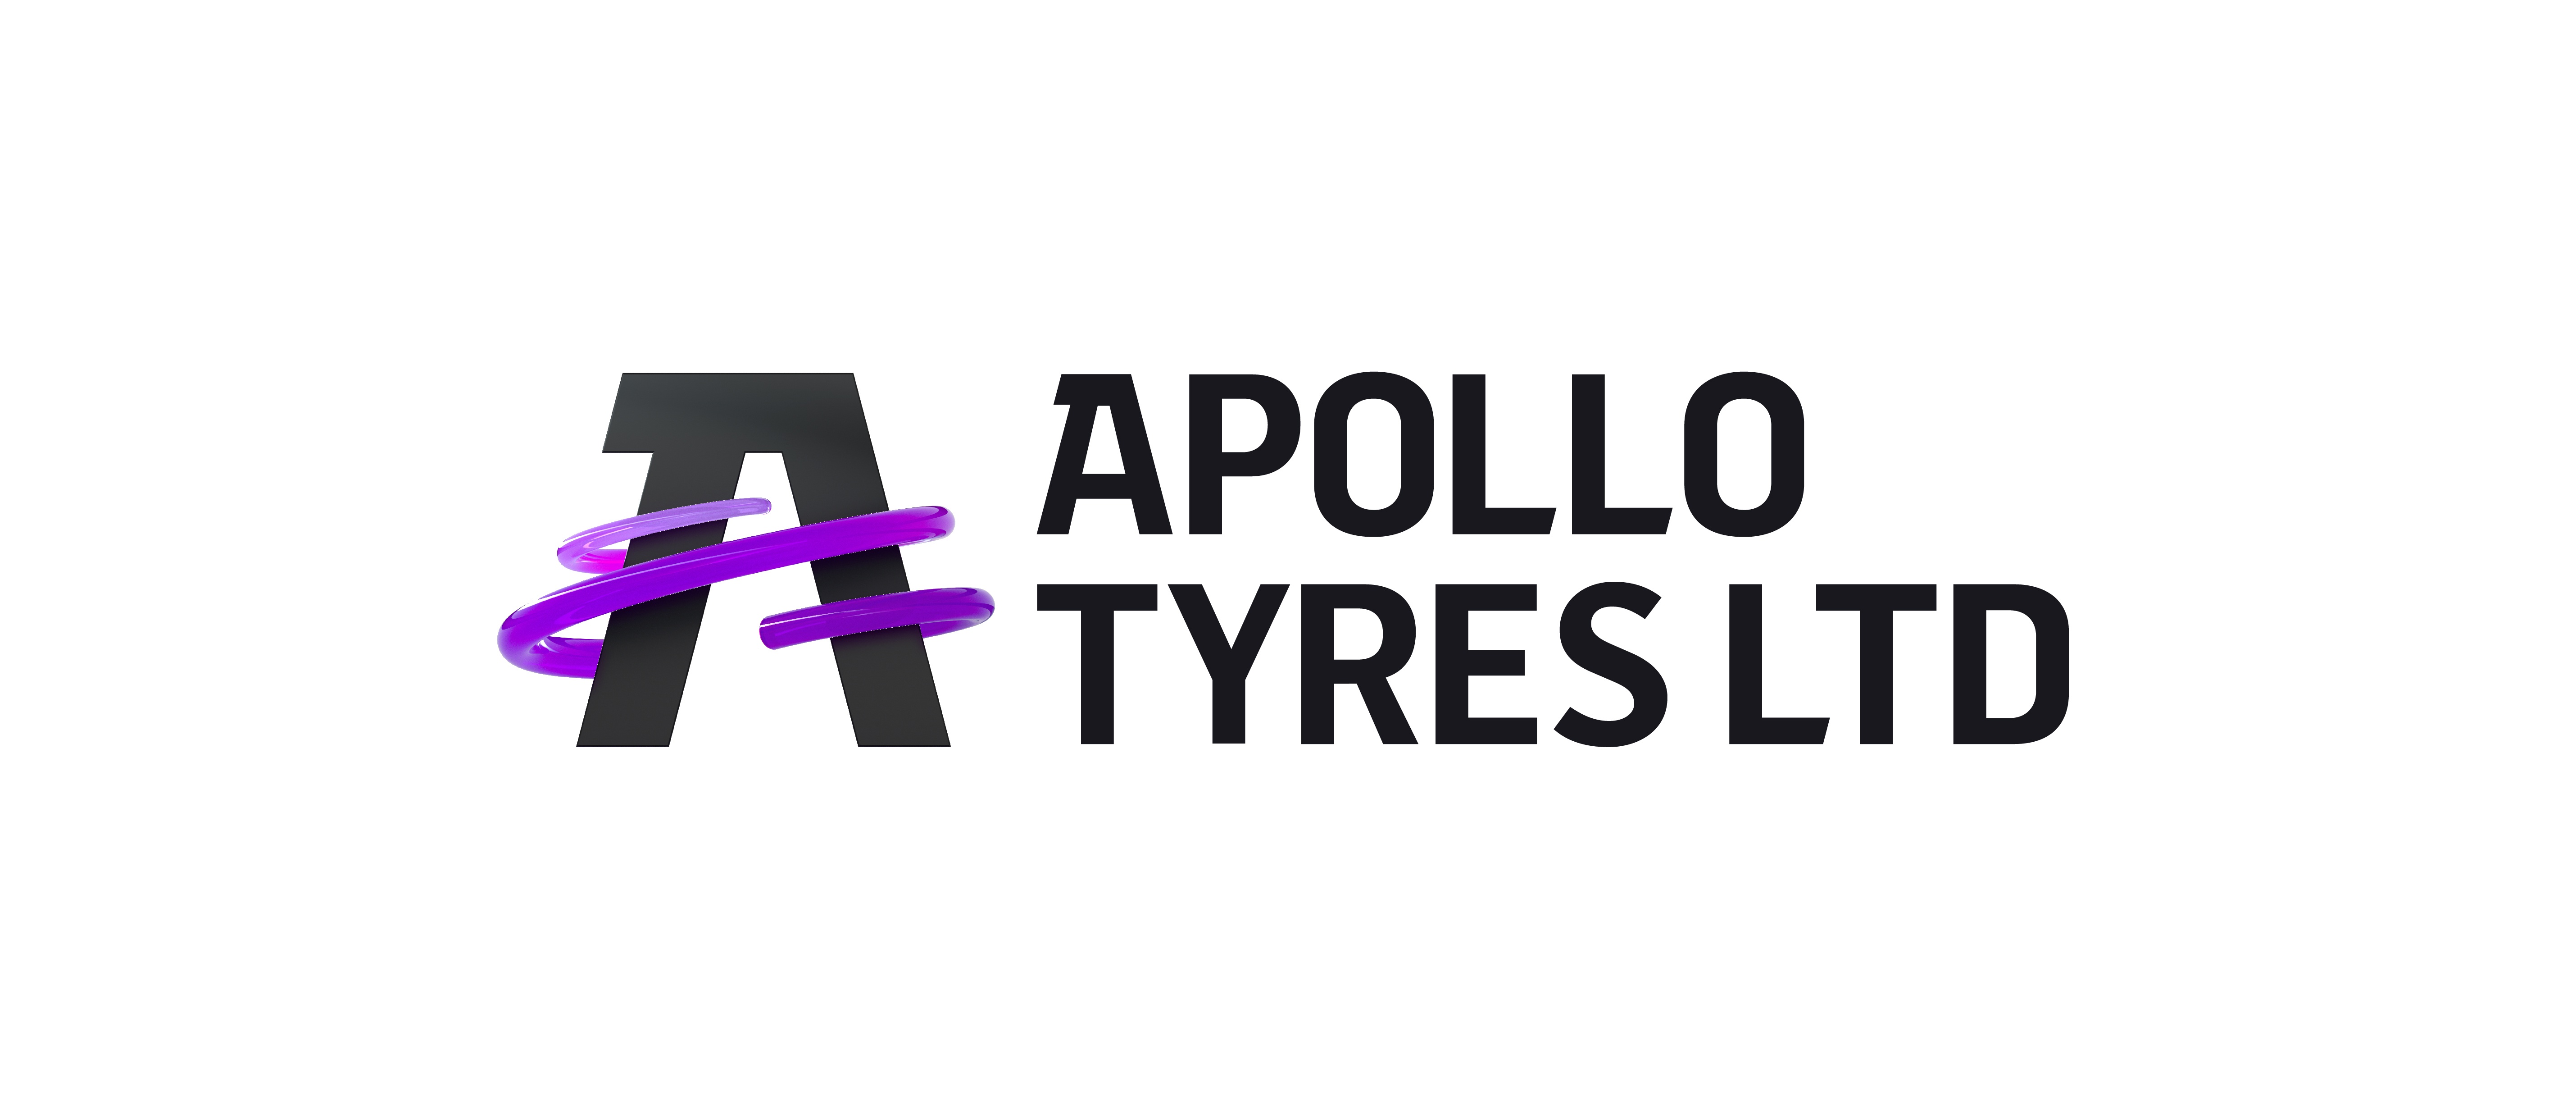 New Identity, New Vision, New Purpose for Apollo Tyres Ltd